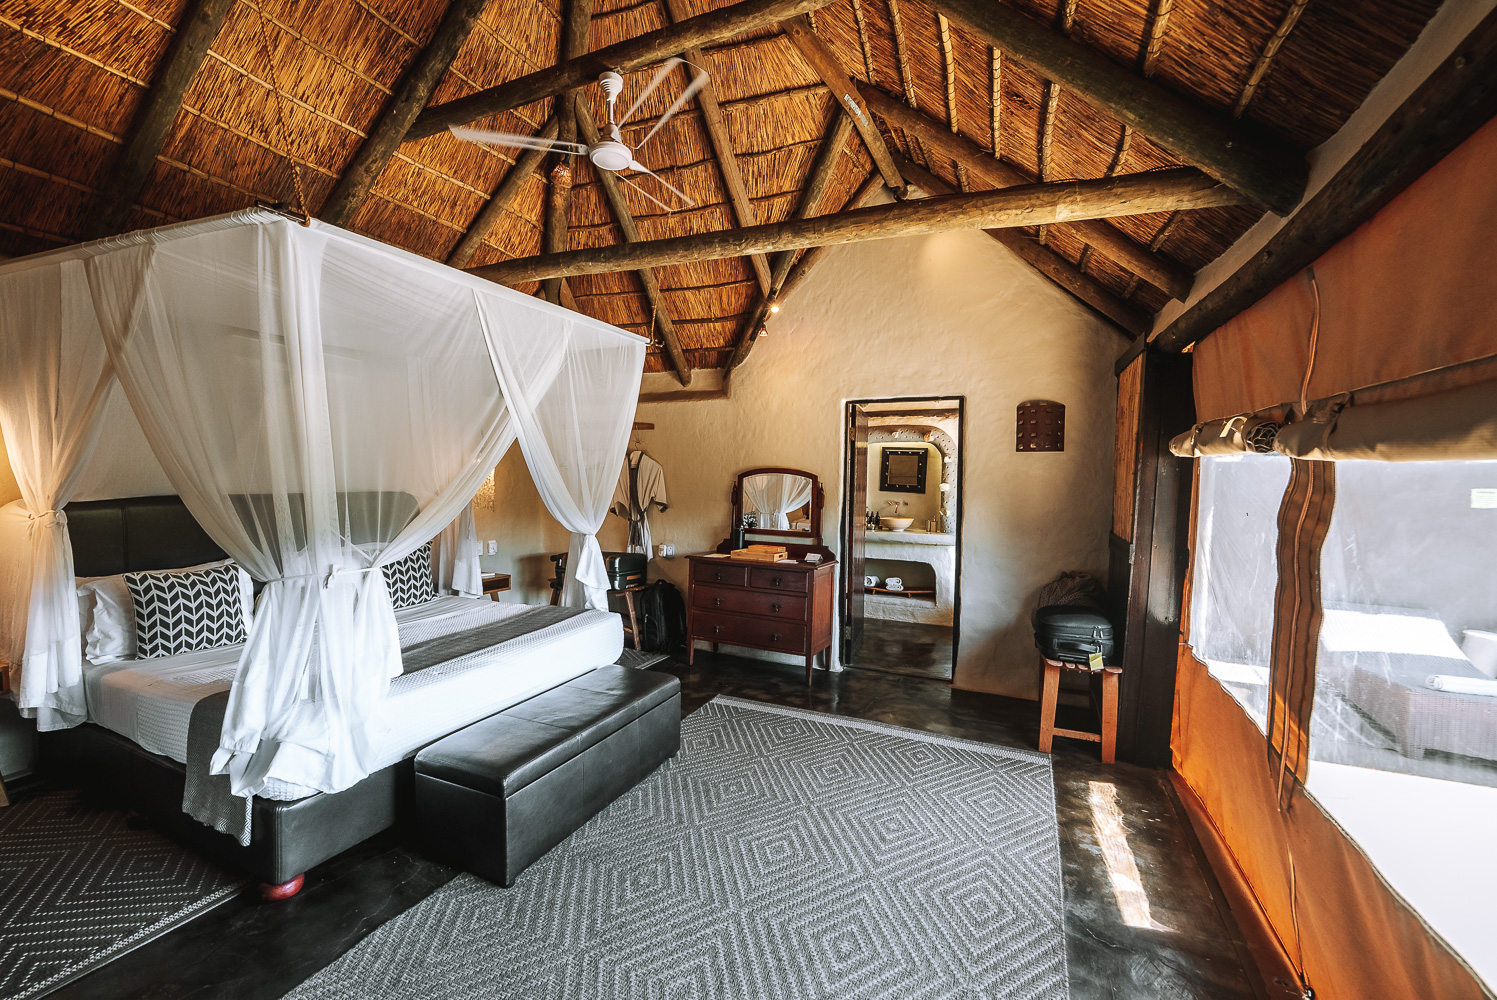 Our suite at the Amakhala Safari Lodge